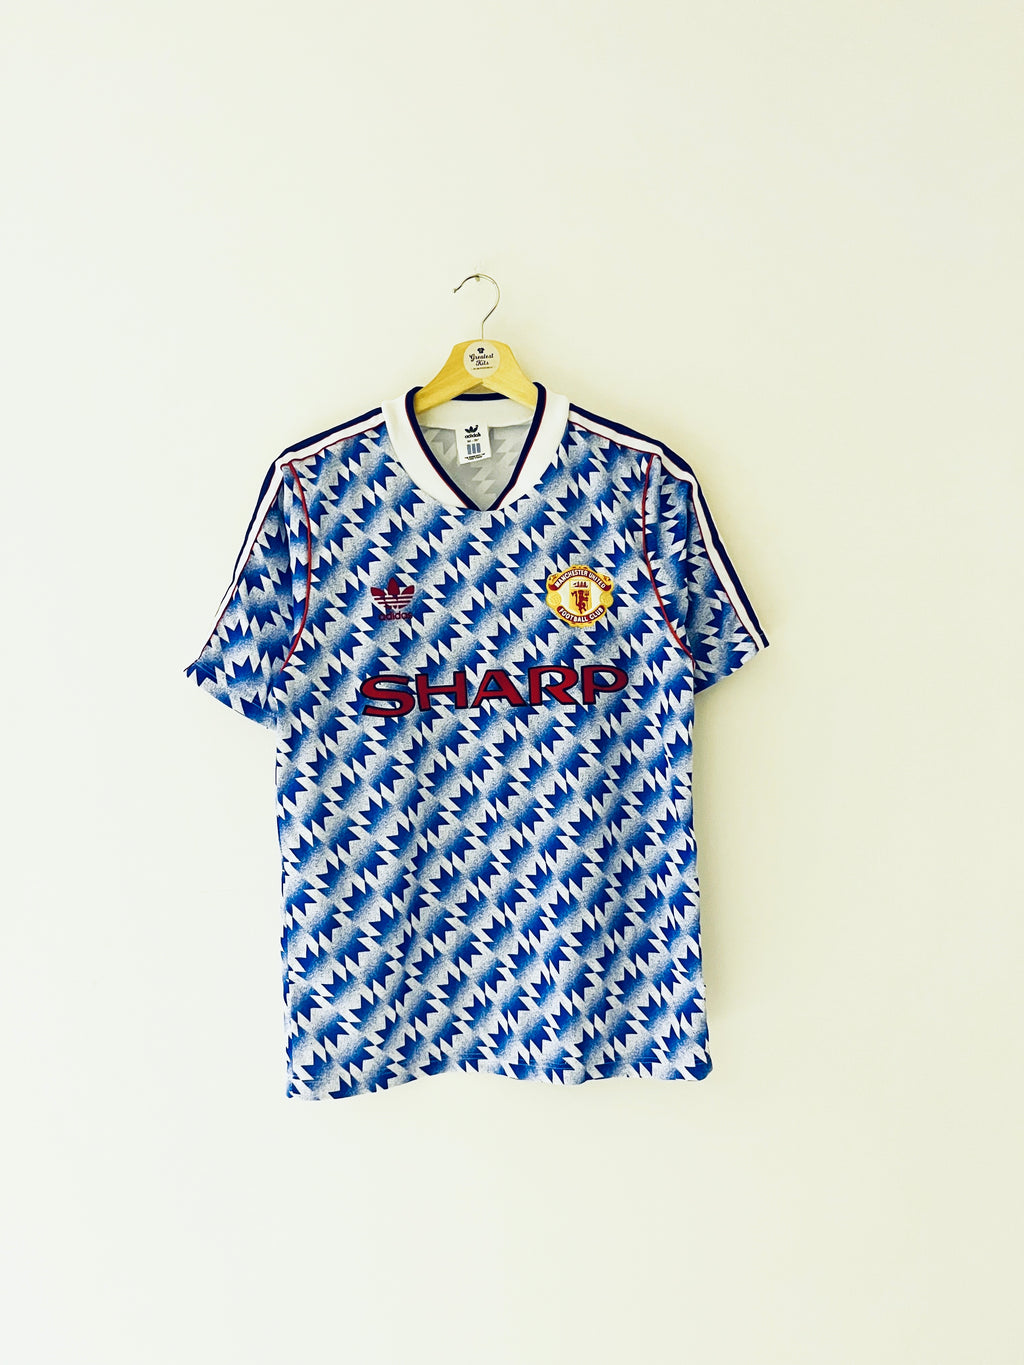 Manchester United Training/Leisure football shirt 1989 - 1990.